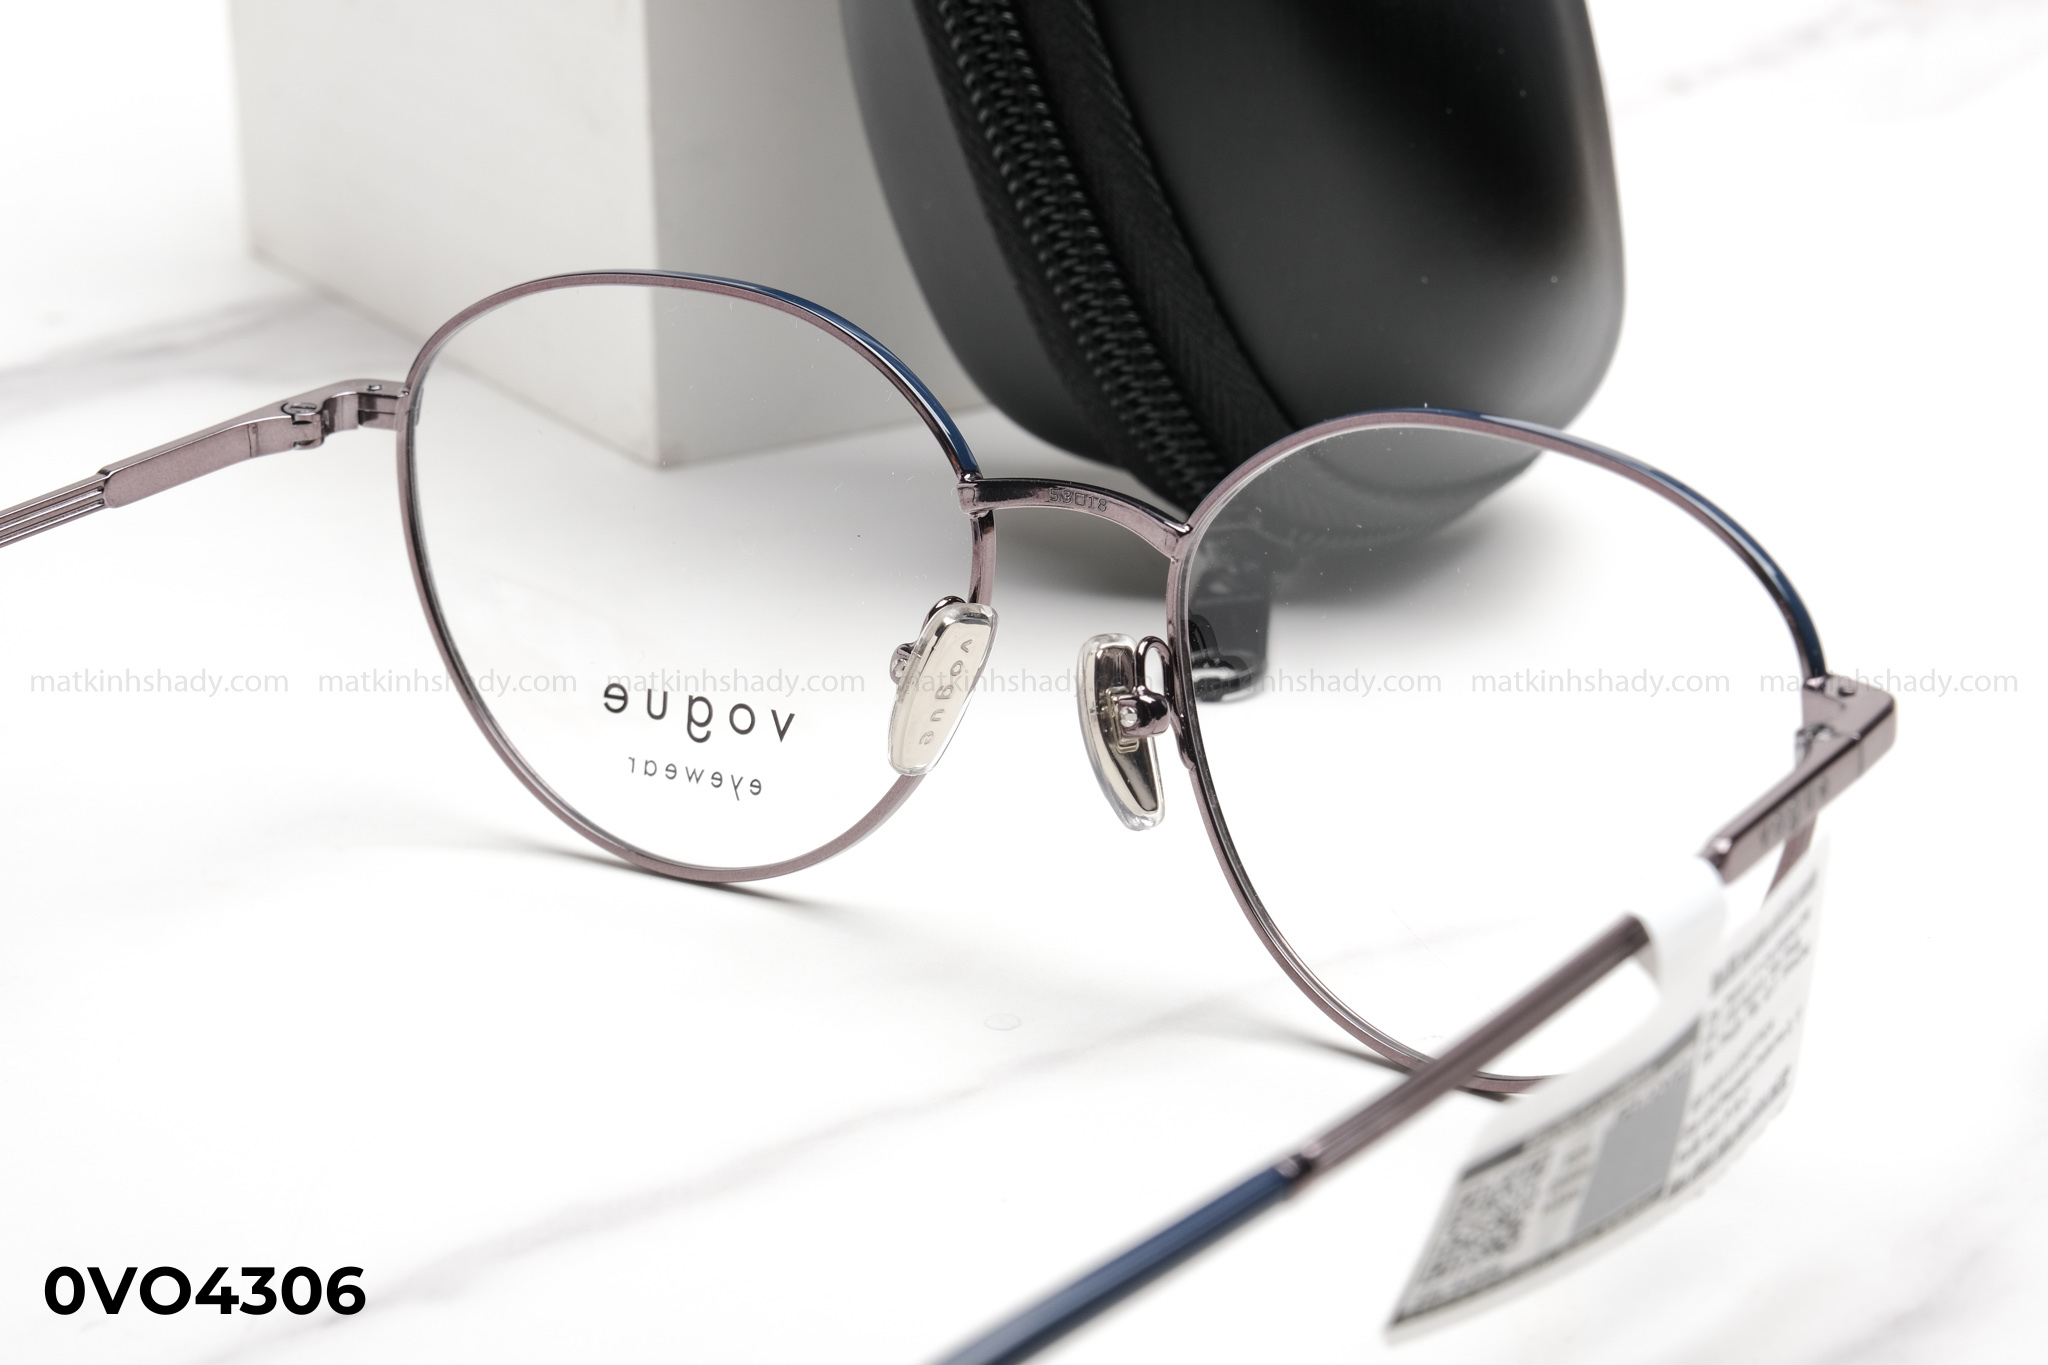  Vogue Eyewear - Glasses - 0VO4306 